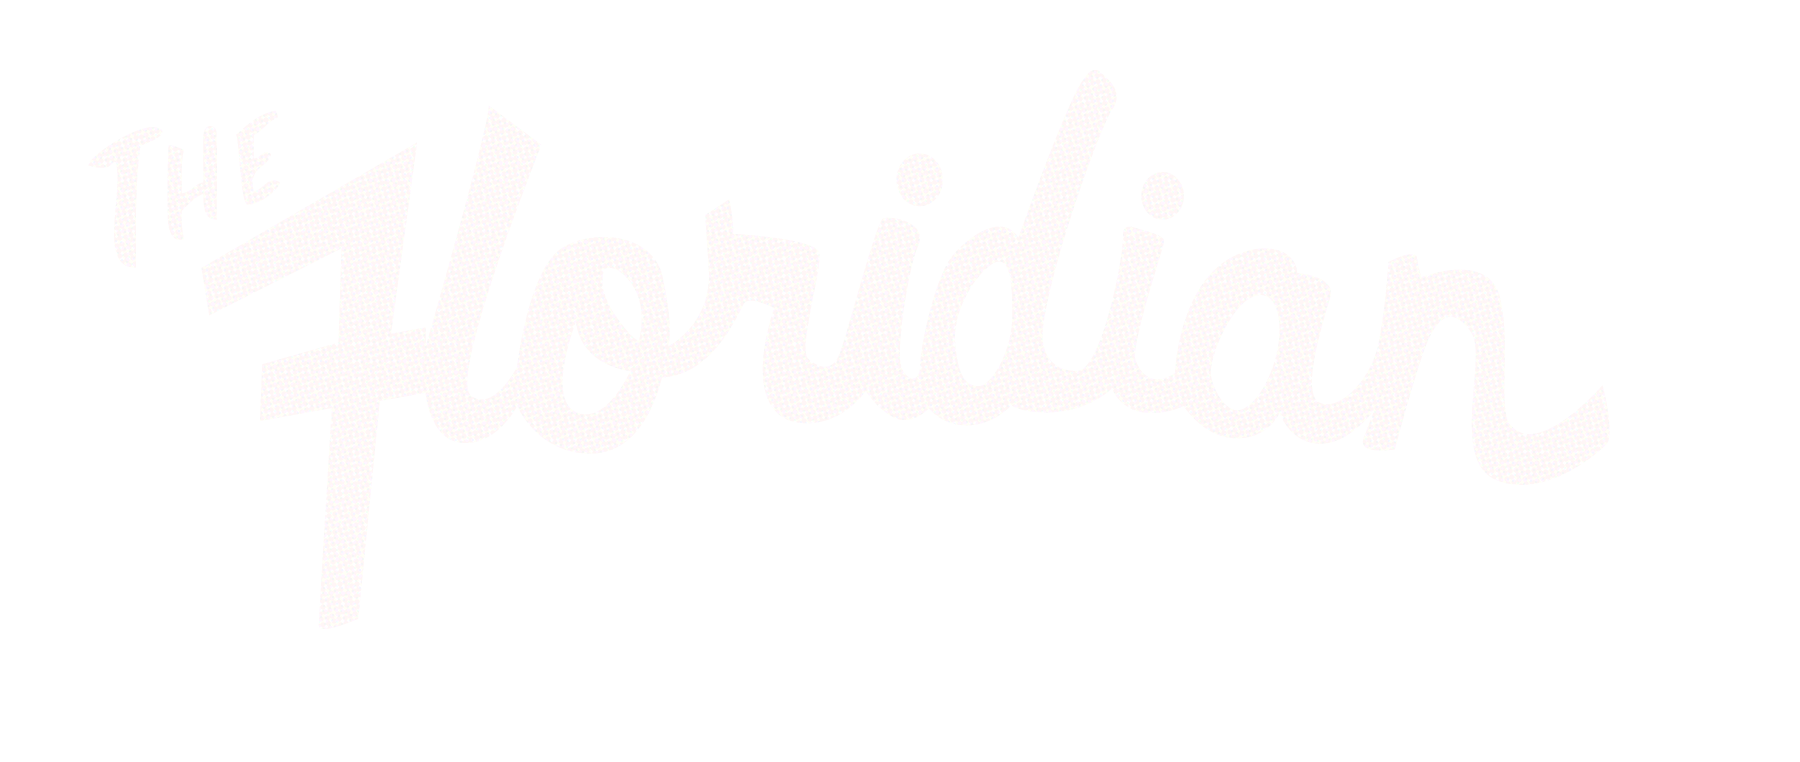 The Floridian